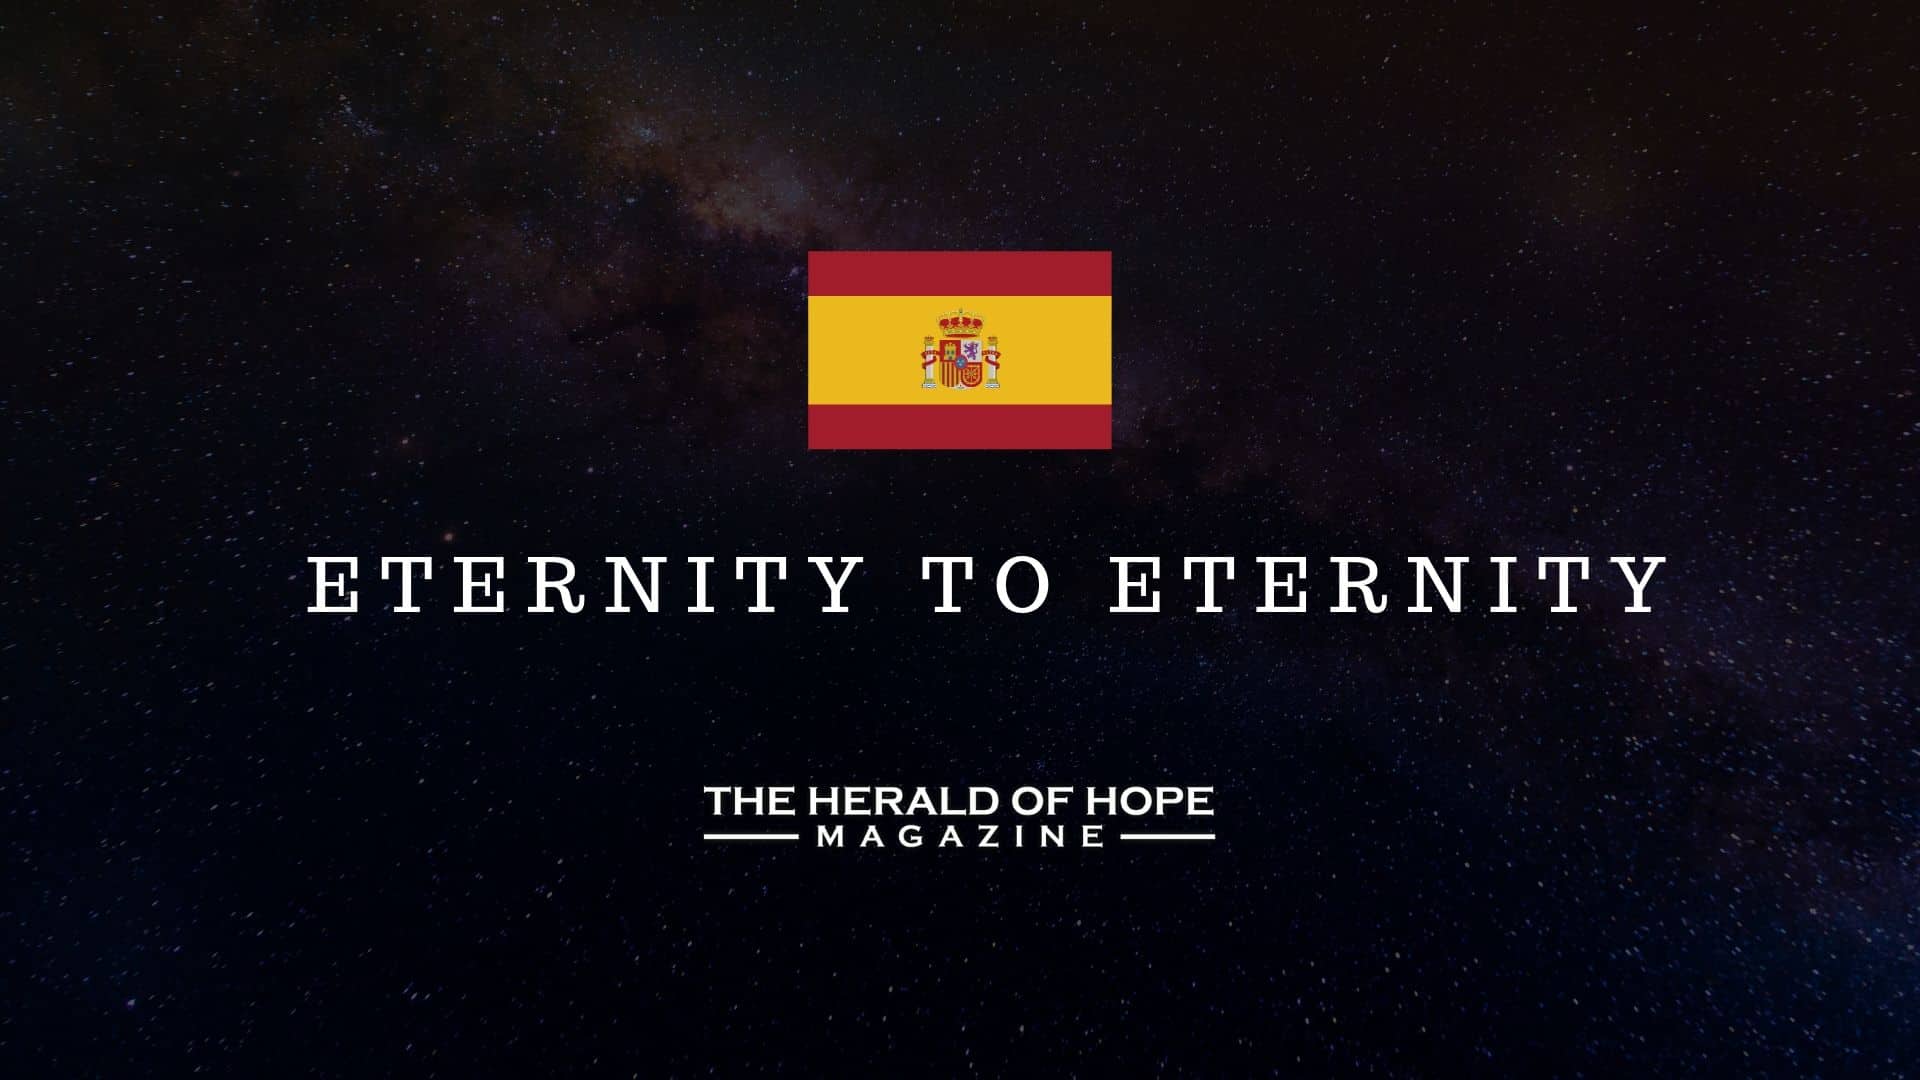 De eternidad a eternidad - Eternity to Eternity Spanish Version